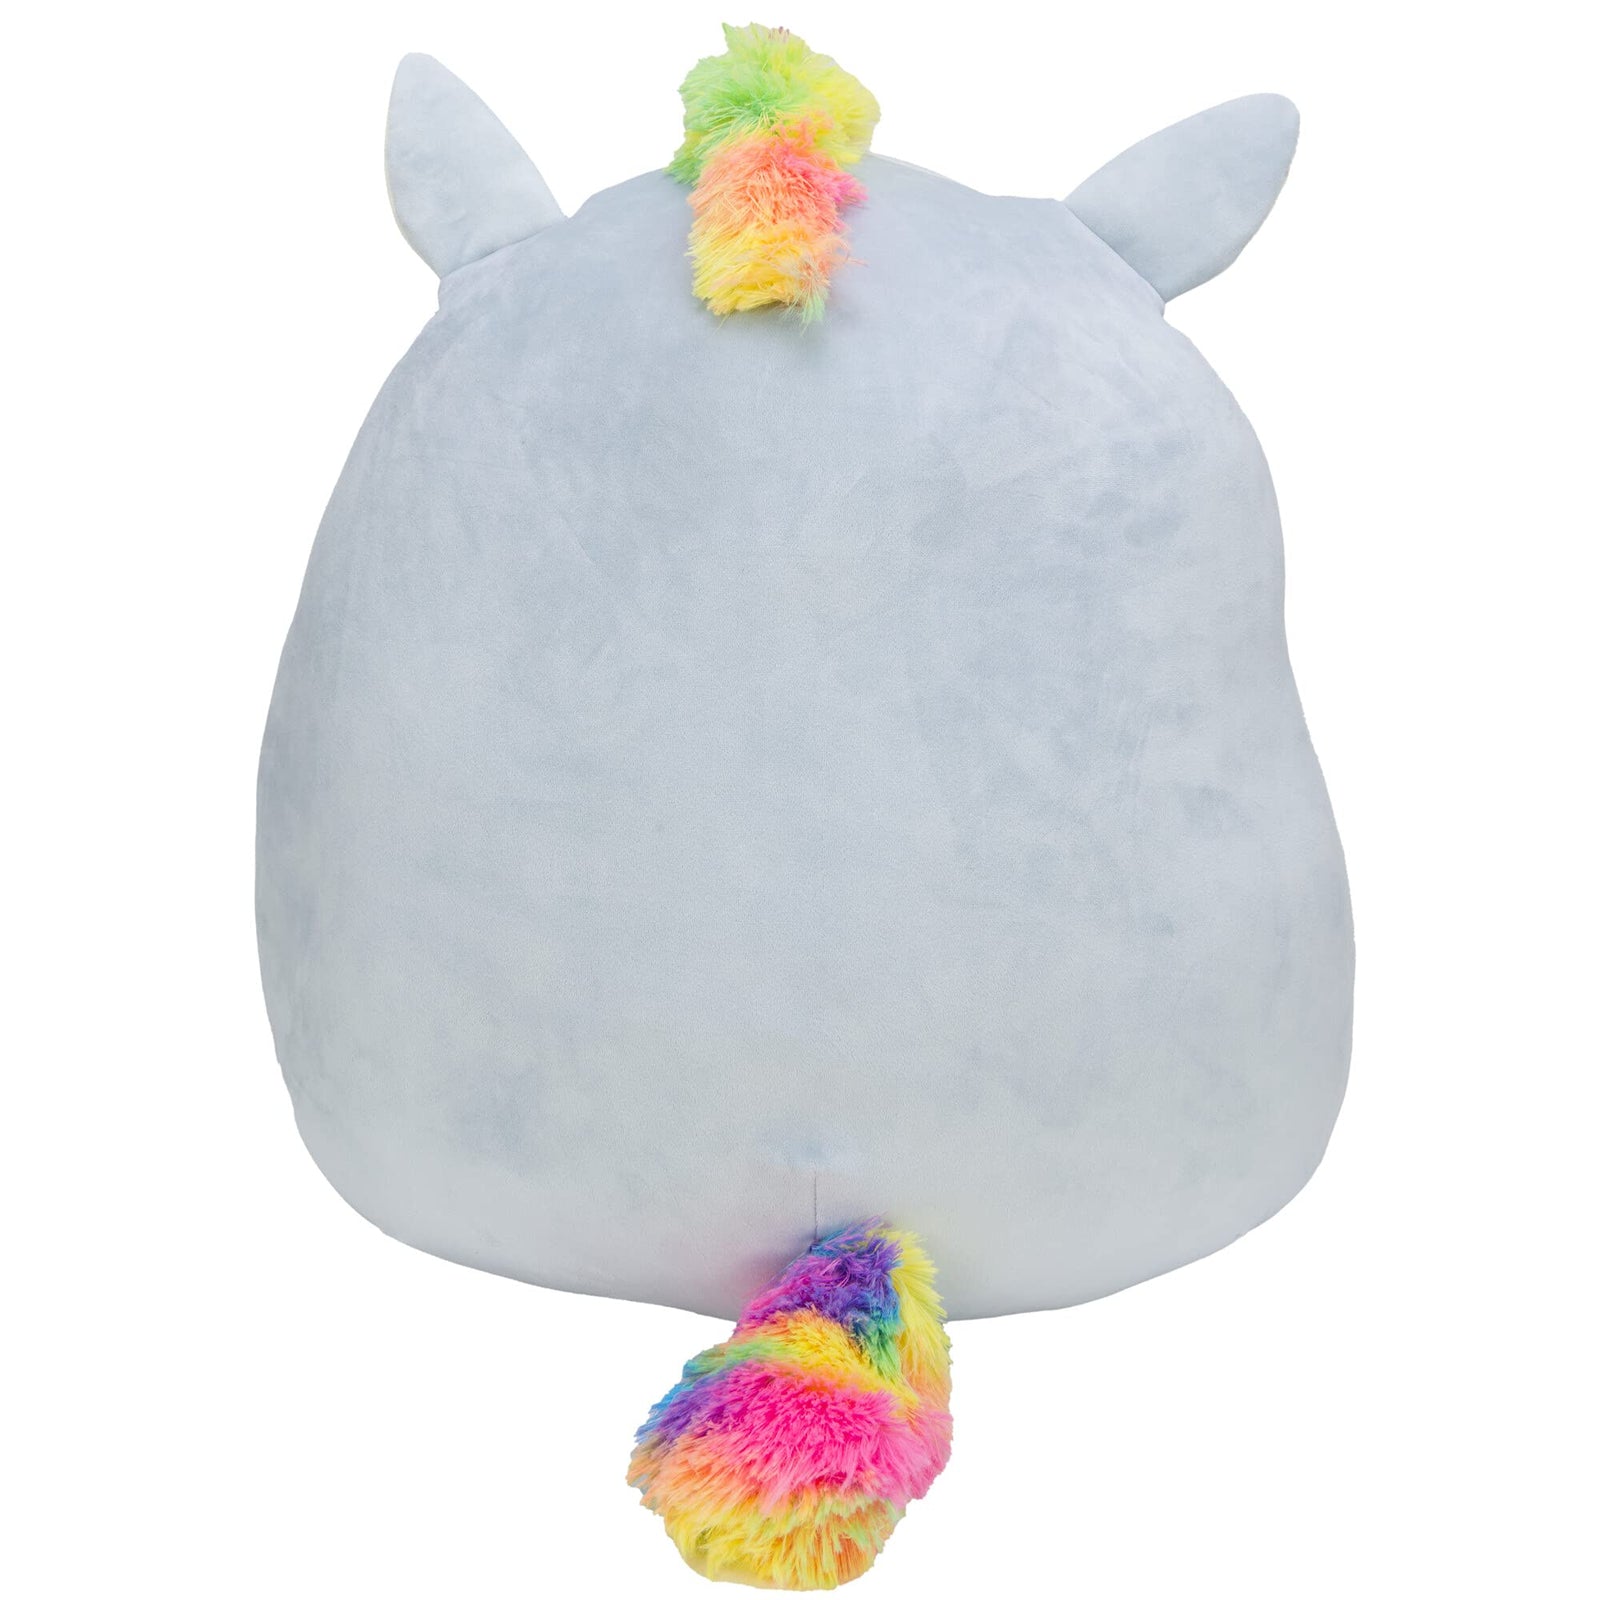 Squishmallow 20-Inch Unicorn - Add Petula to Your Squish Squad, Ultrasoft Stuffed Animal Jumbo Plush Toy, Official Kellytoy Plush